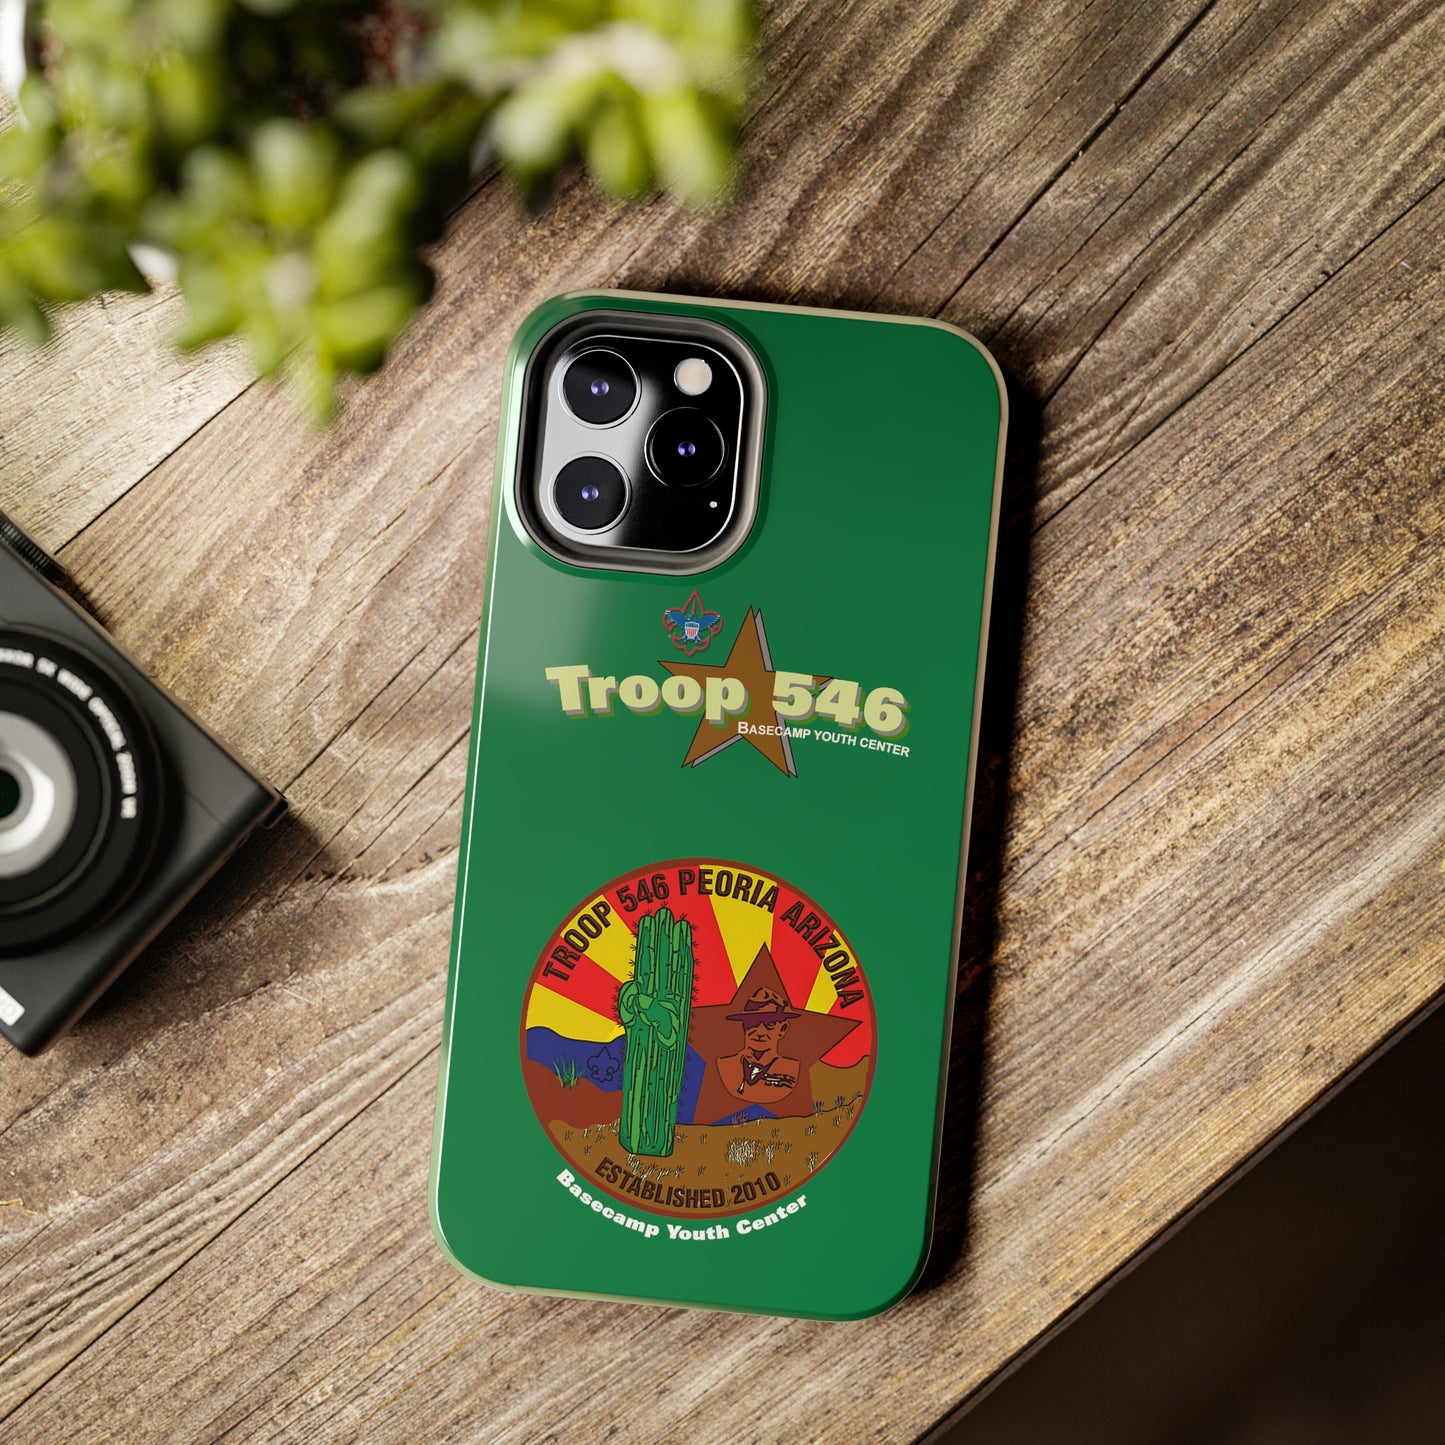 Troop 546 - Tough Phone Cases